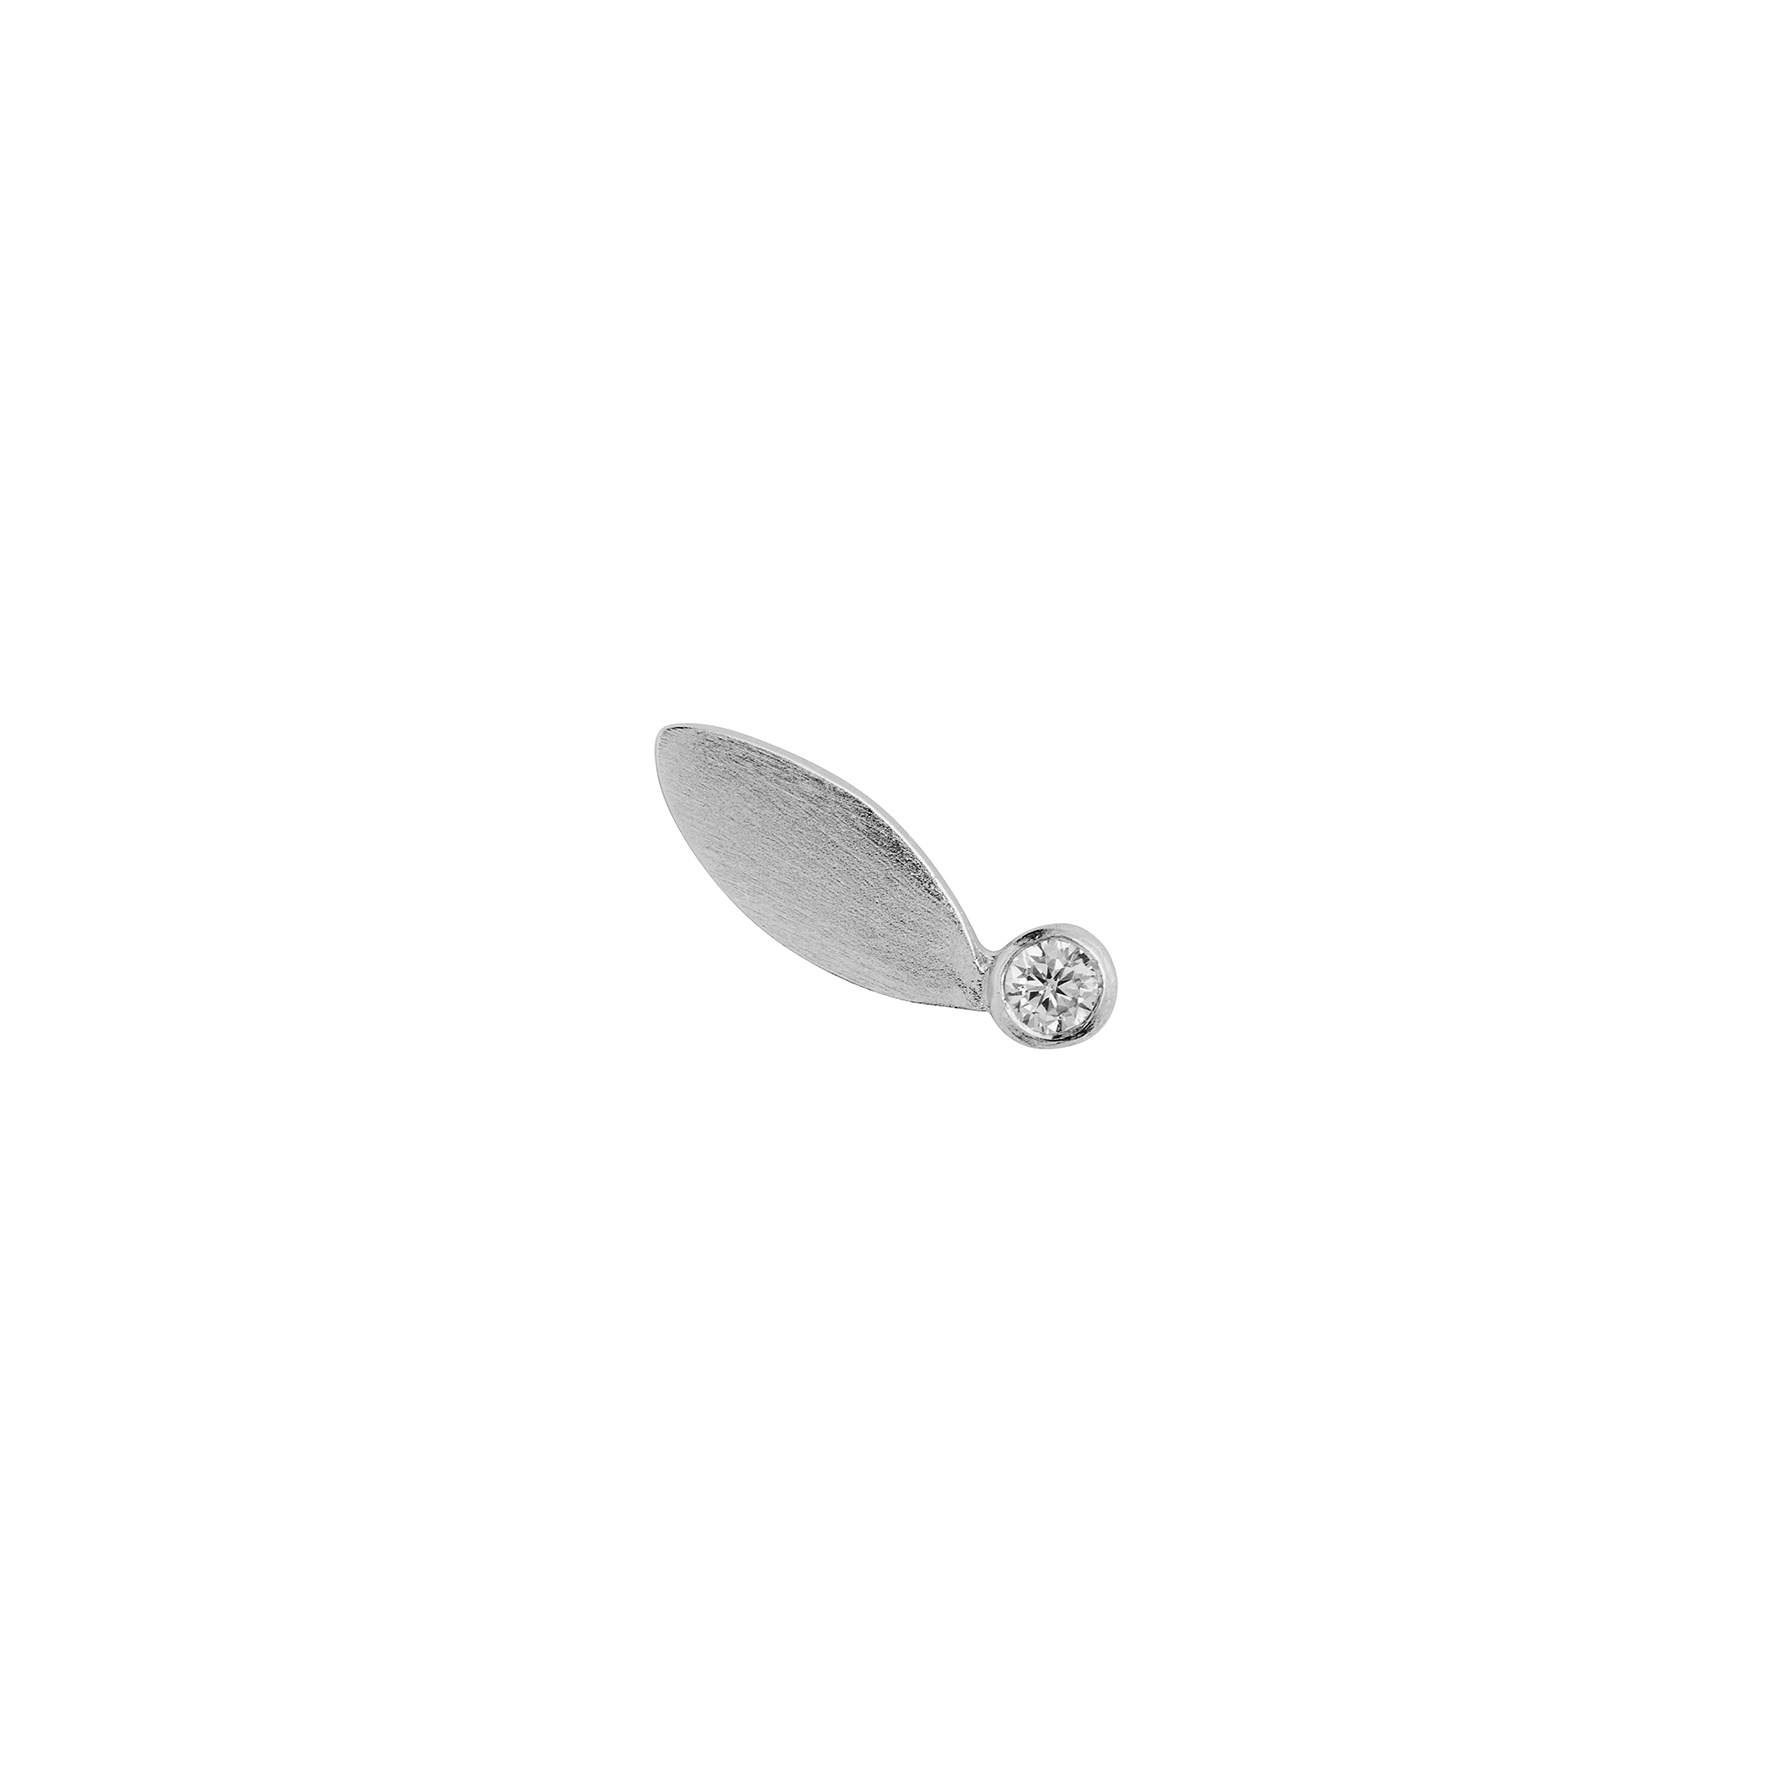 Big Dot Leaf Earstick Light Peridot från STINE A Jewelry i Silver Sterling 925